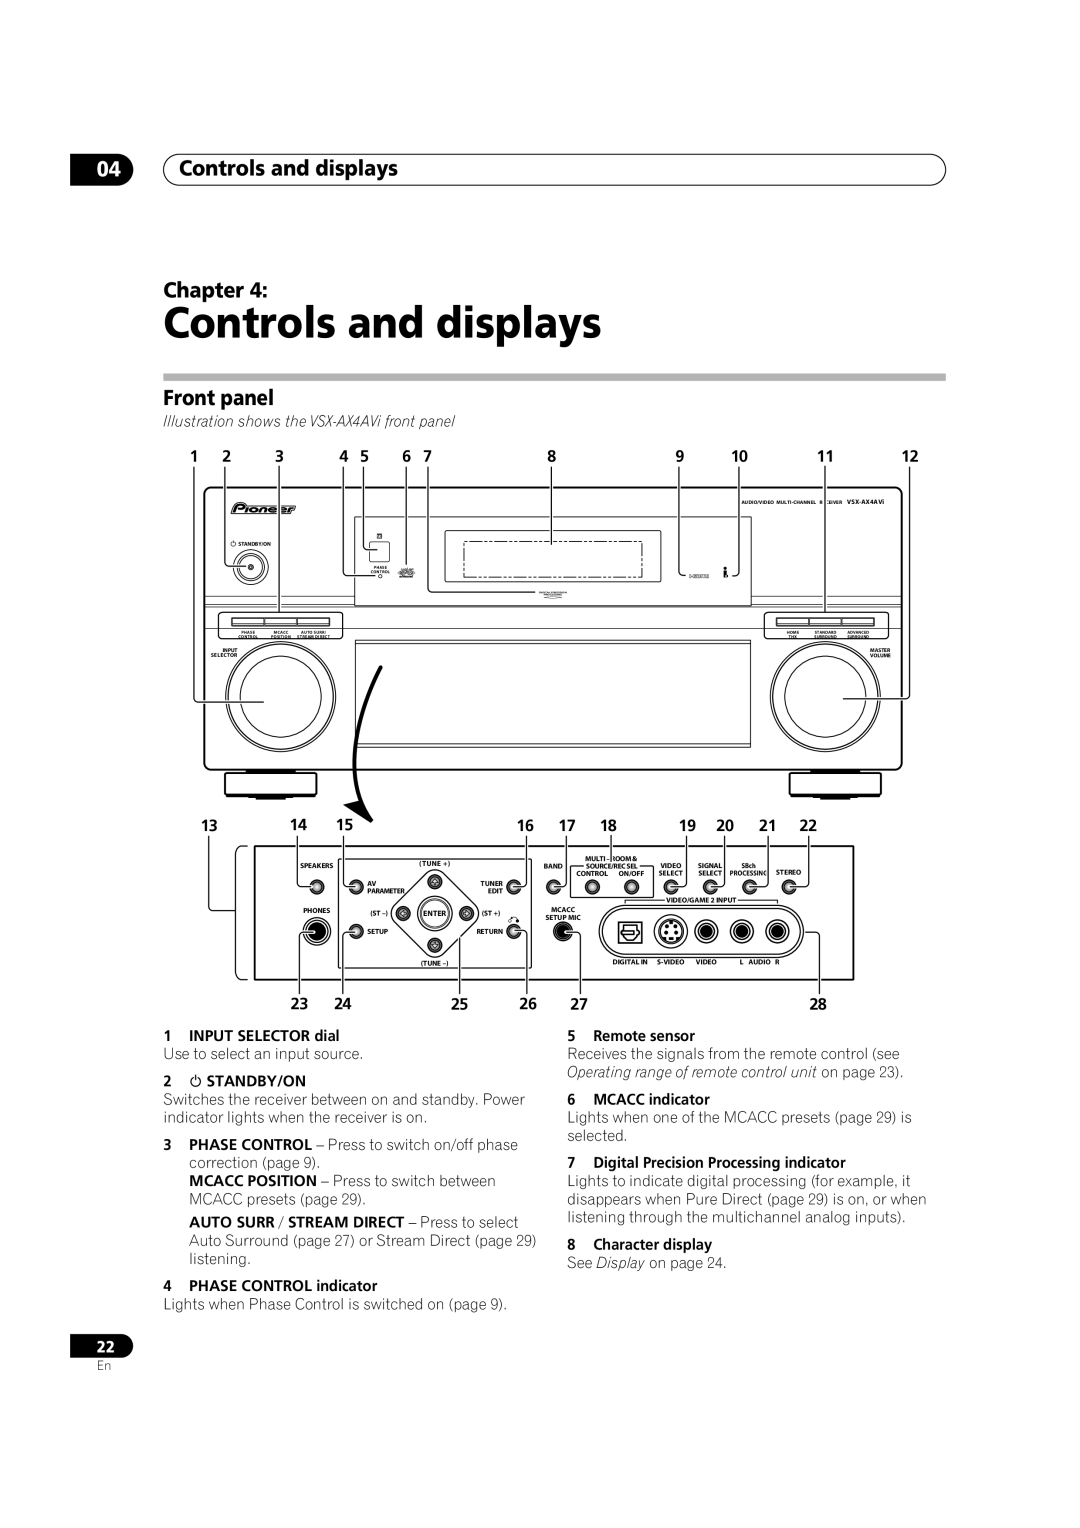 Pioneer VSX-AX2AV-G, VSX-AX4AVi-G manual 04Controls and displays Chapter, Front panel 